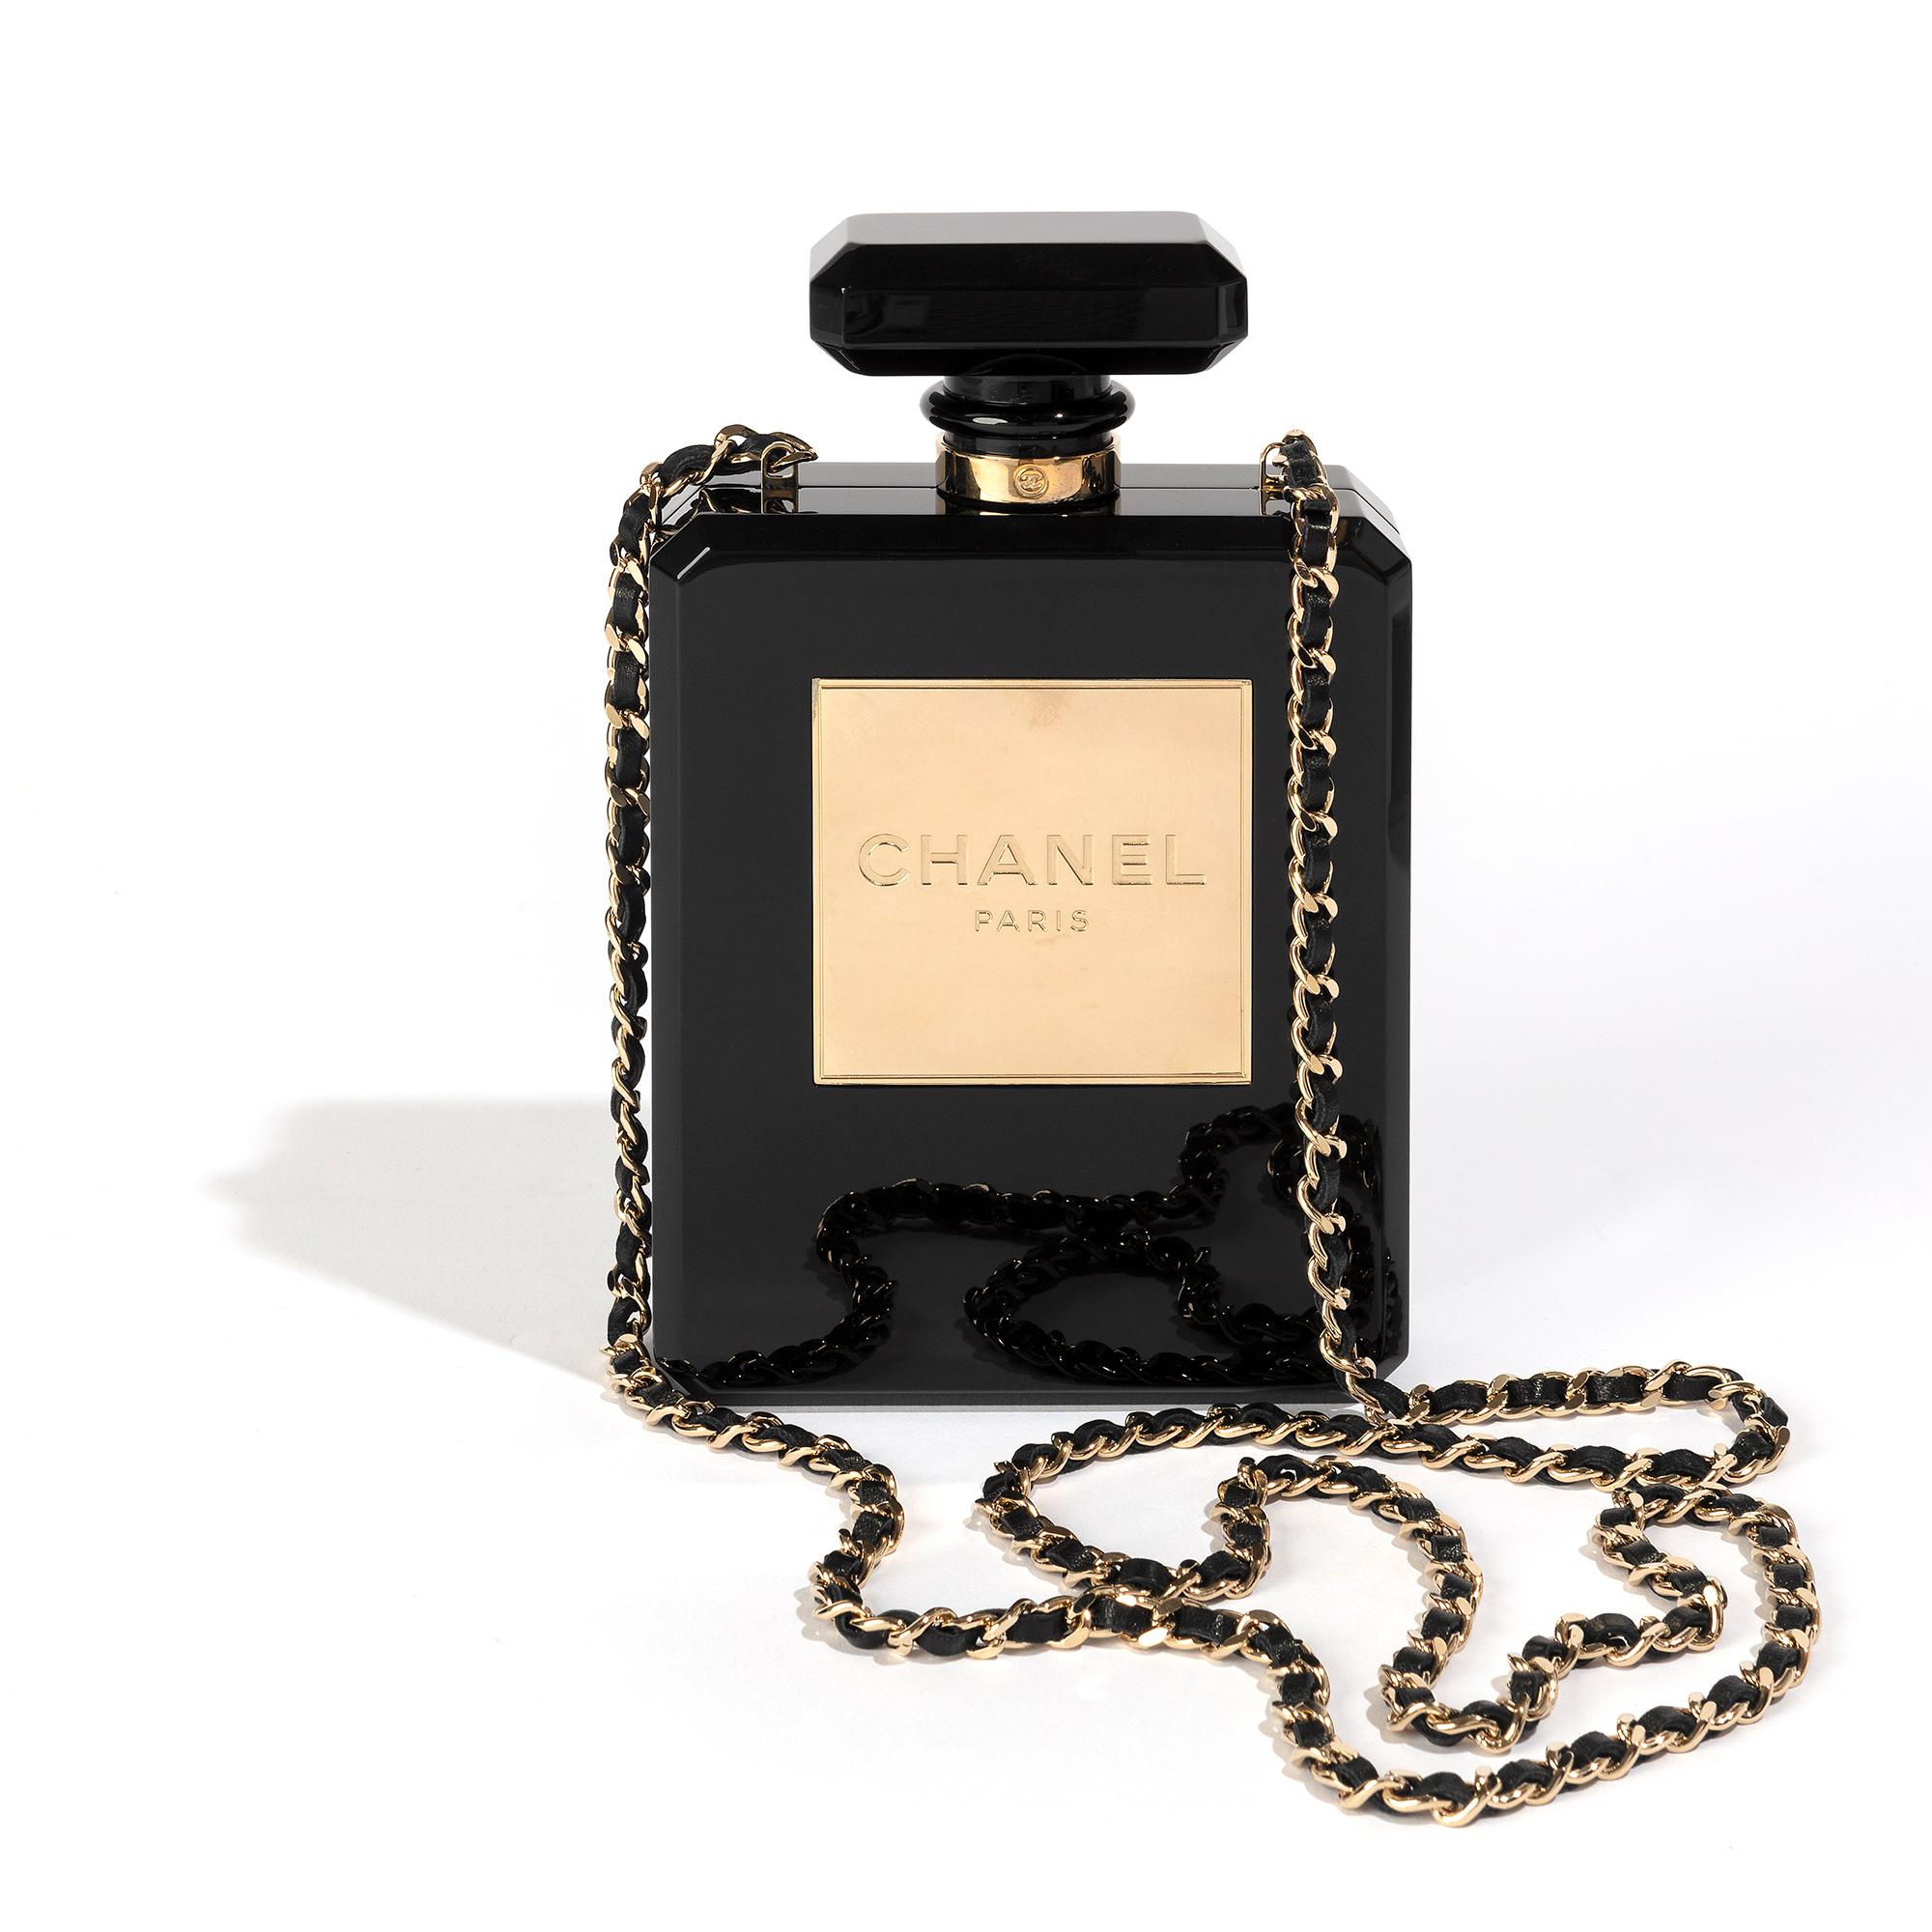 Chanel N5 Perfume Bottle Minaudière 2013  For Sale 1